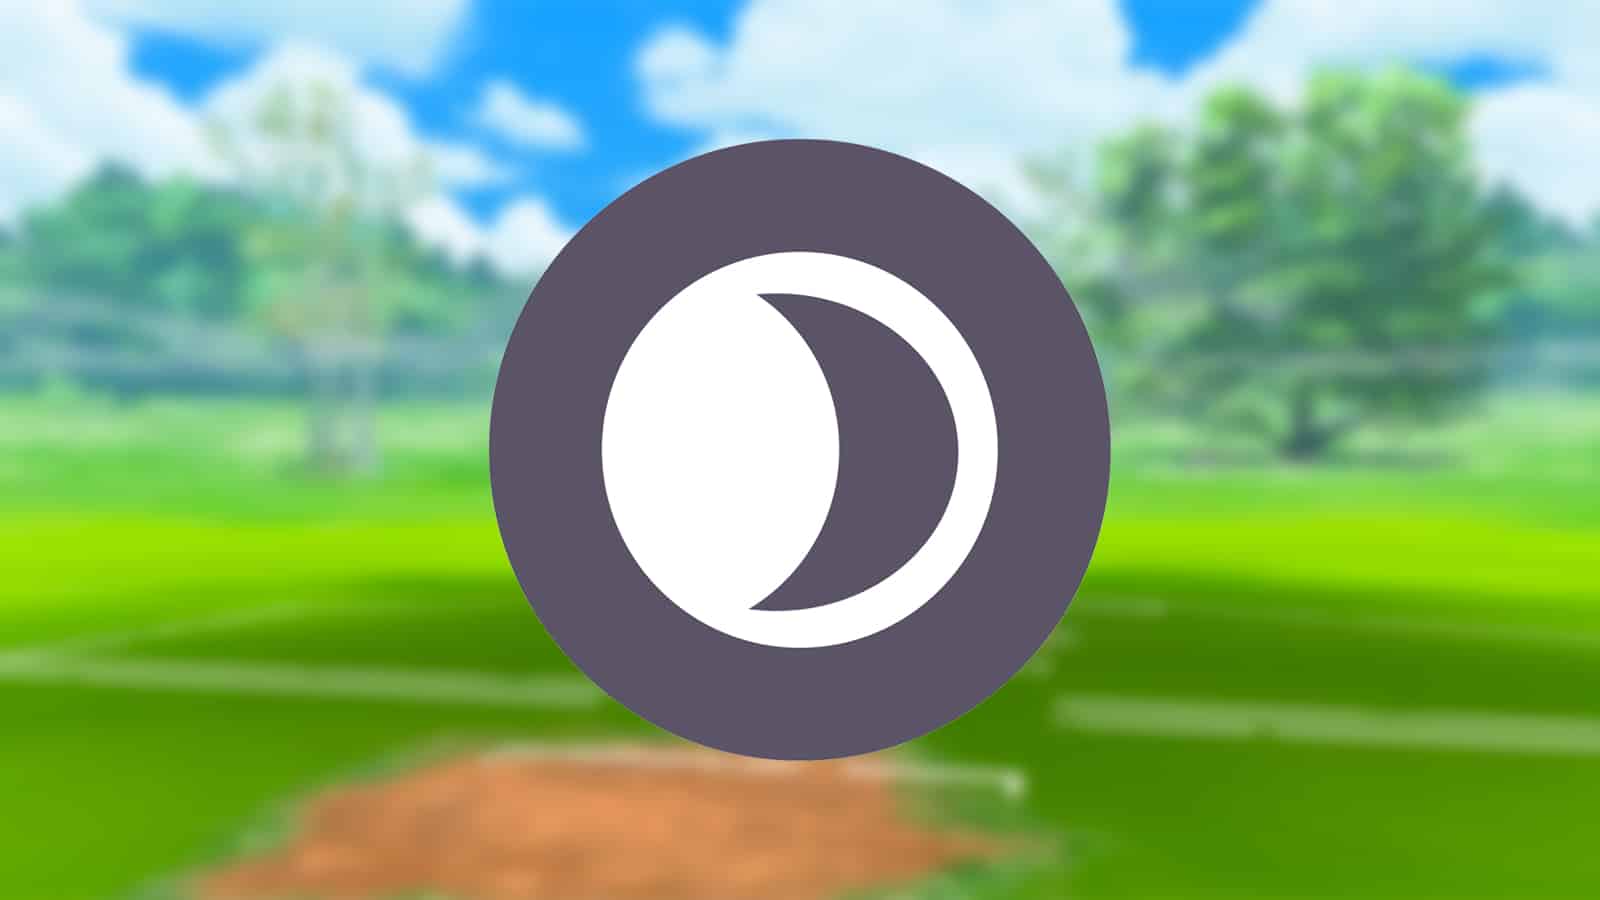 Shiny Deino, evolution chart, 100% perfect IV stats and Hydreigon best  moveset in Pokémon Go